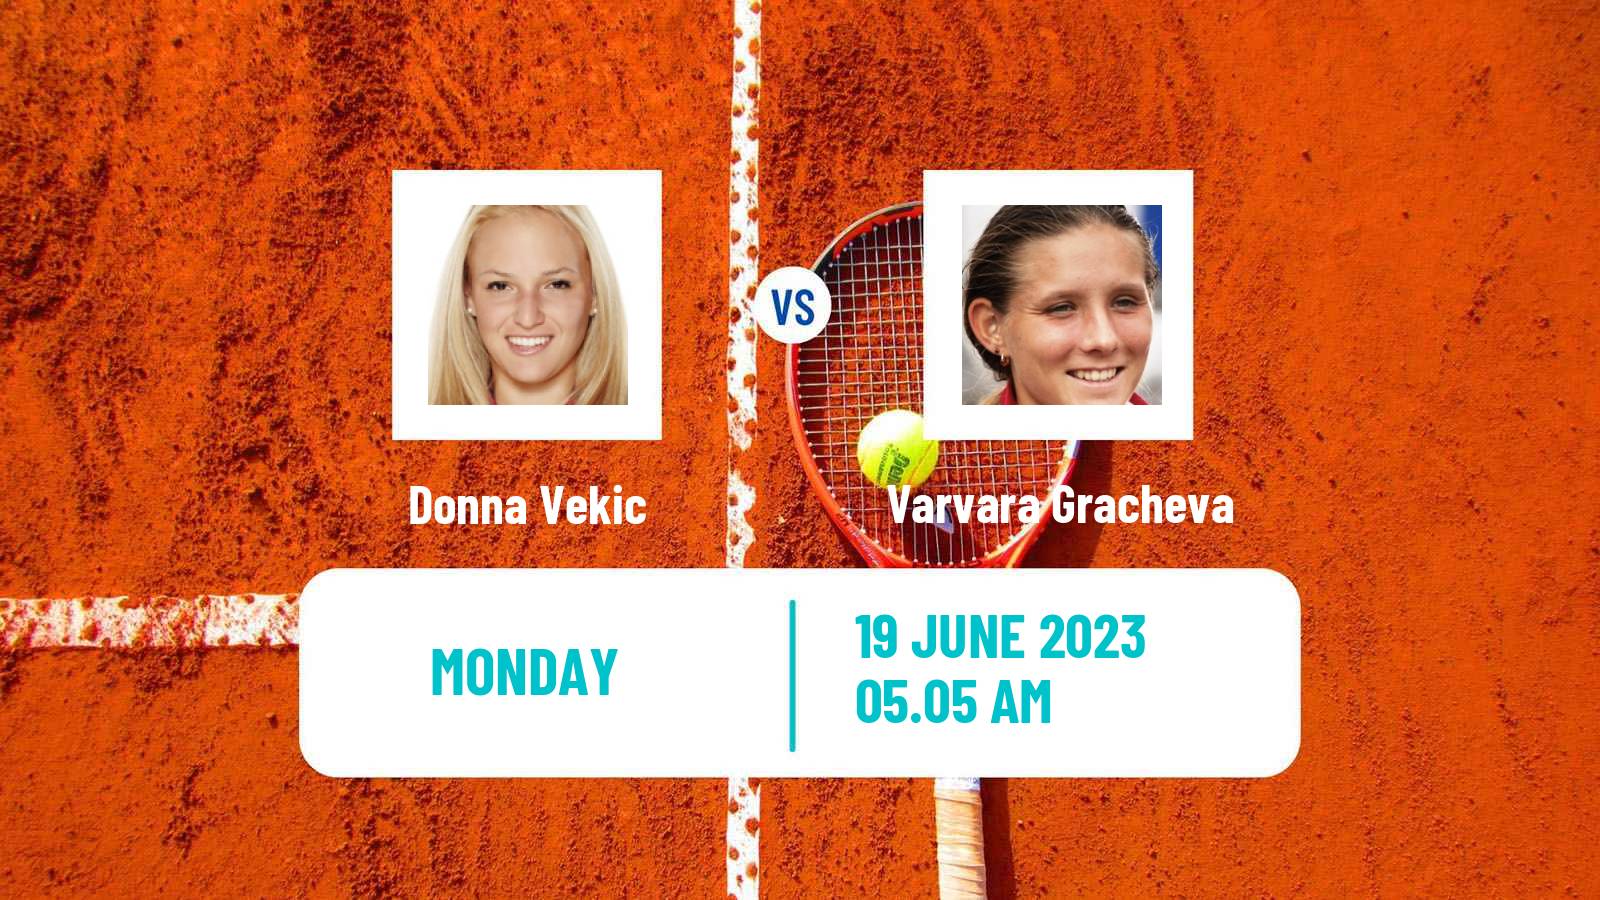 Tennis WTA Berlin Donna Vekic - Varvara Gracheva